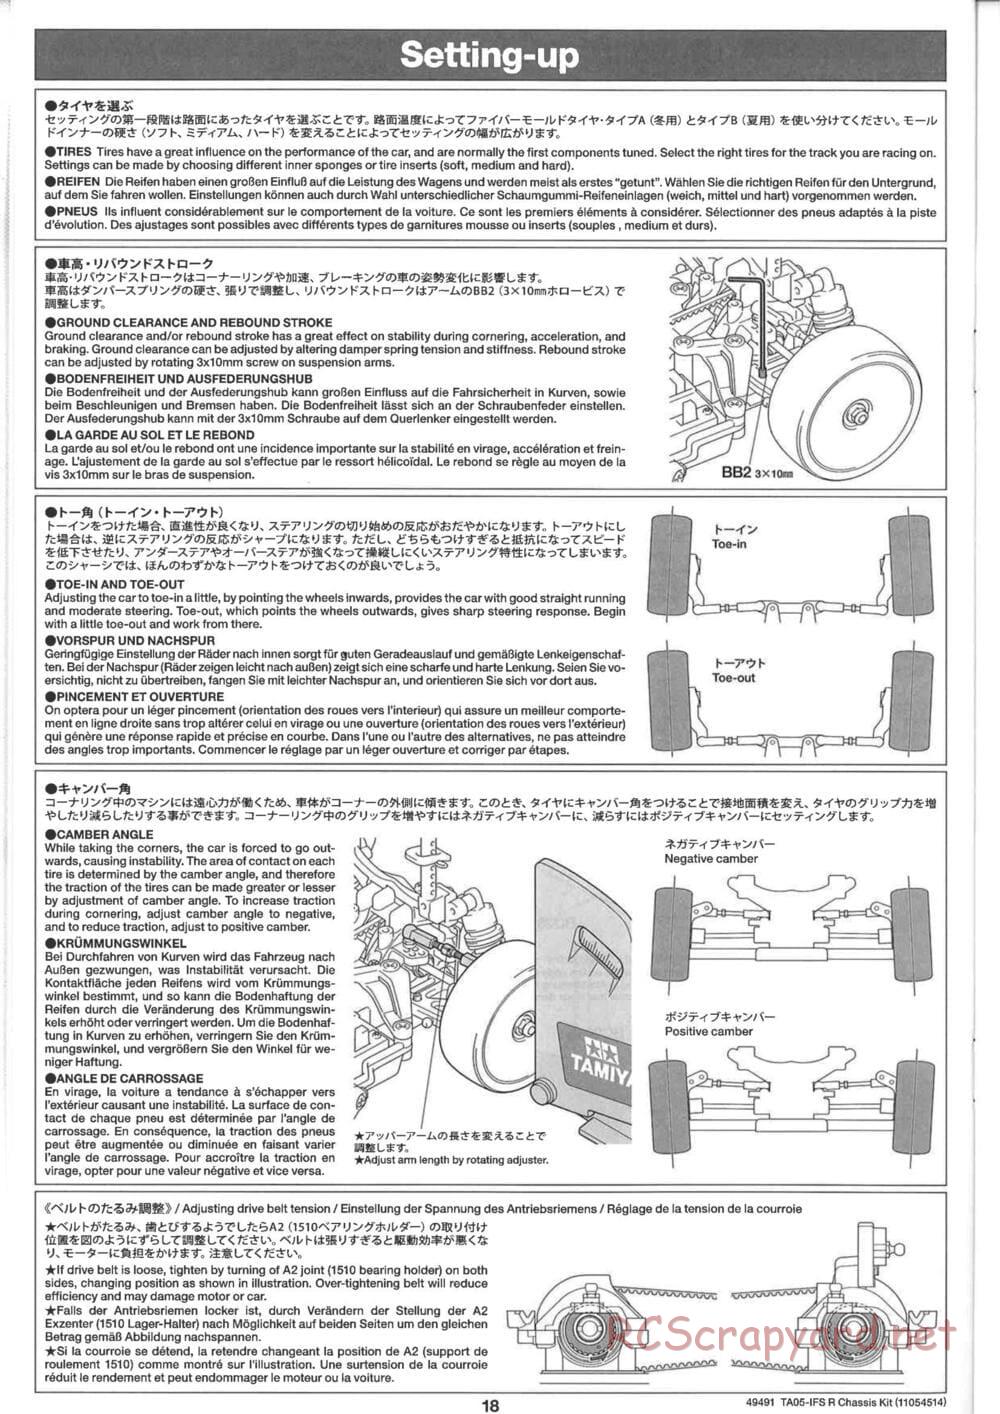 Tamiya - TA05-IFS R Chassis - Manual - Page 18